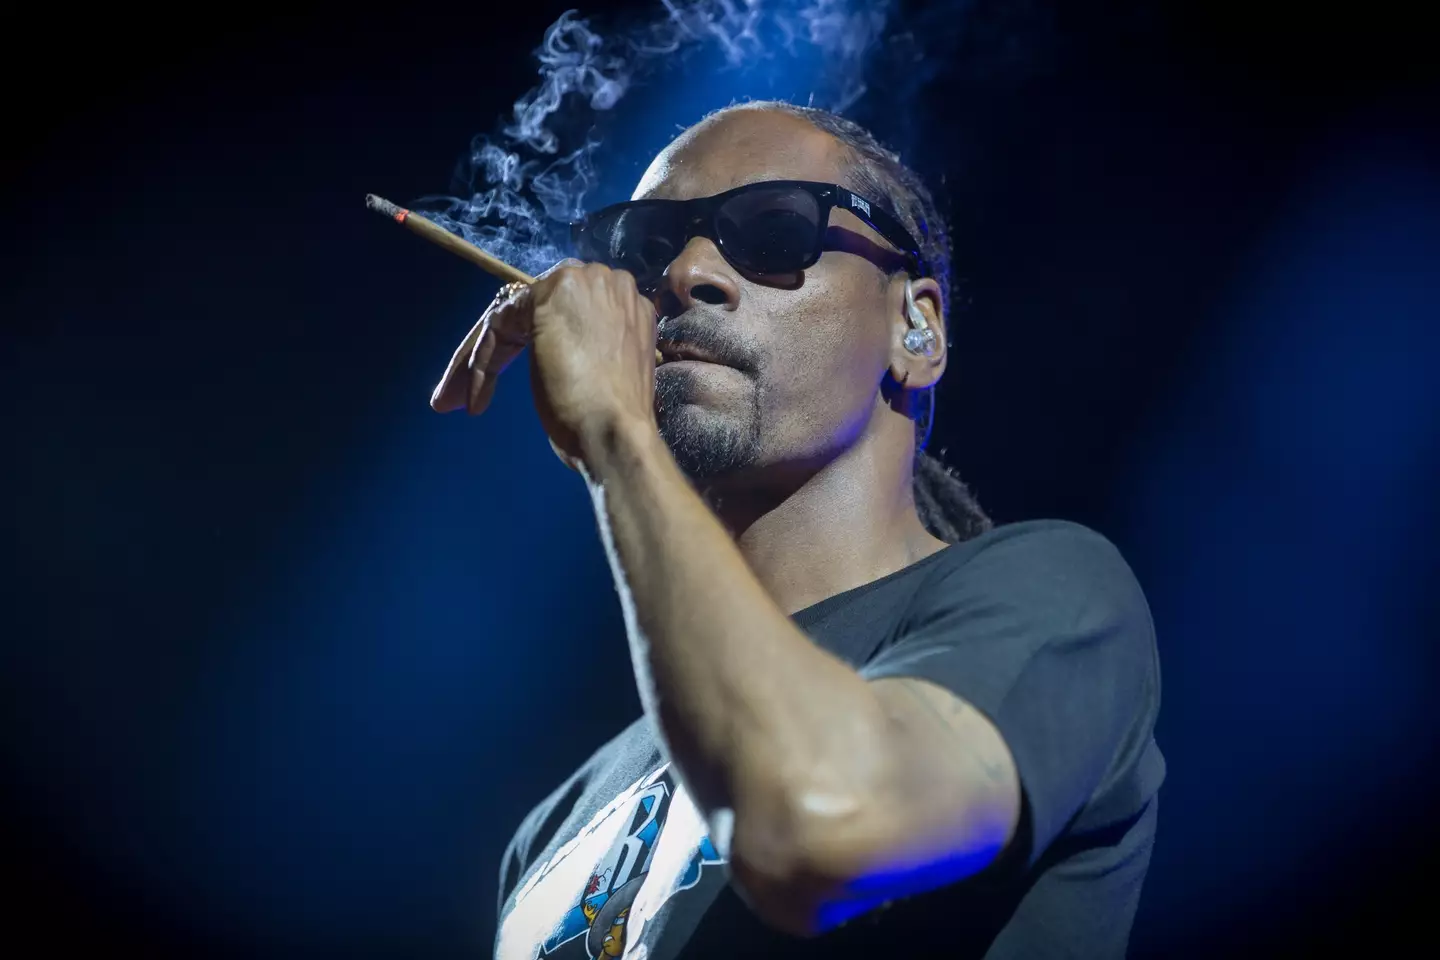 Snoop Dogg taking a smoke break.